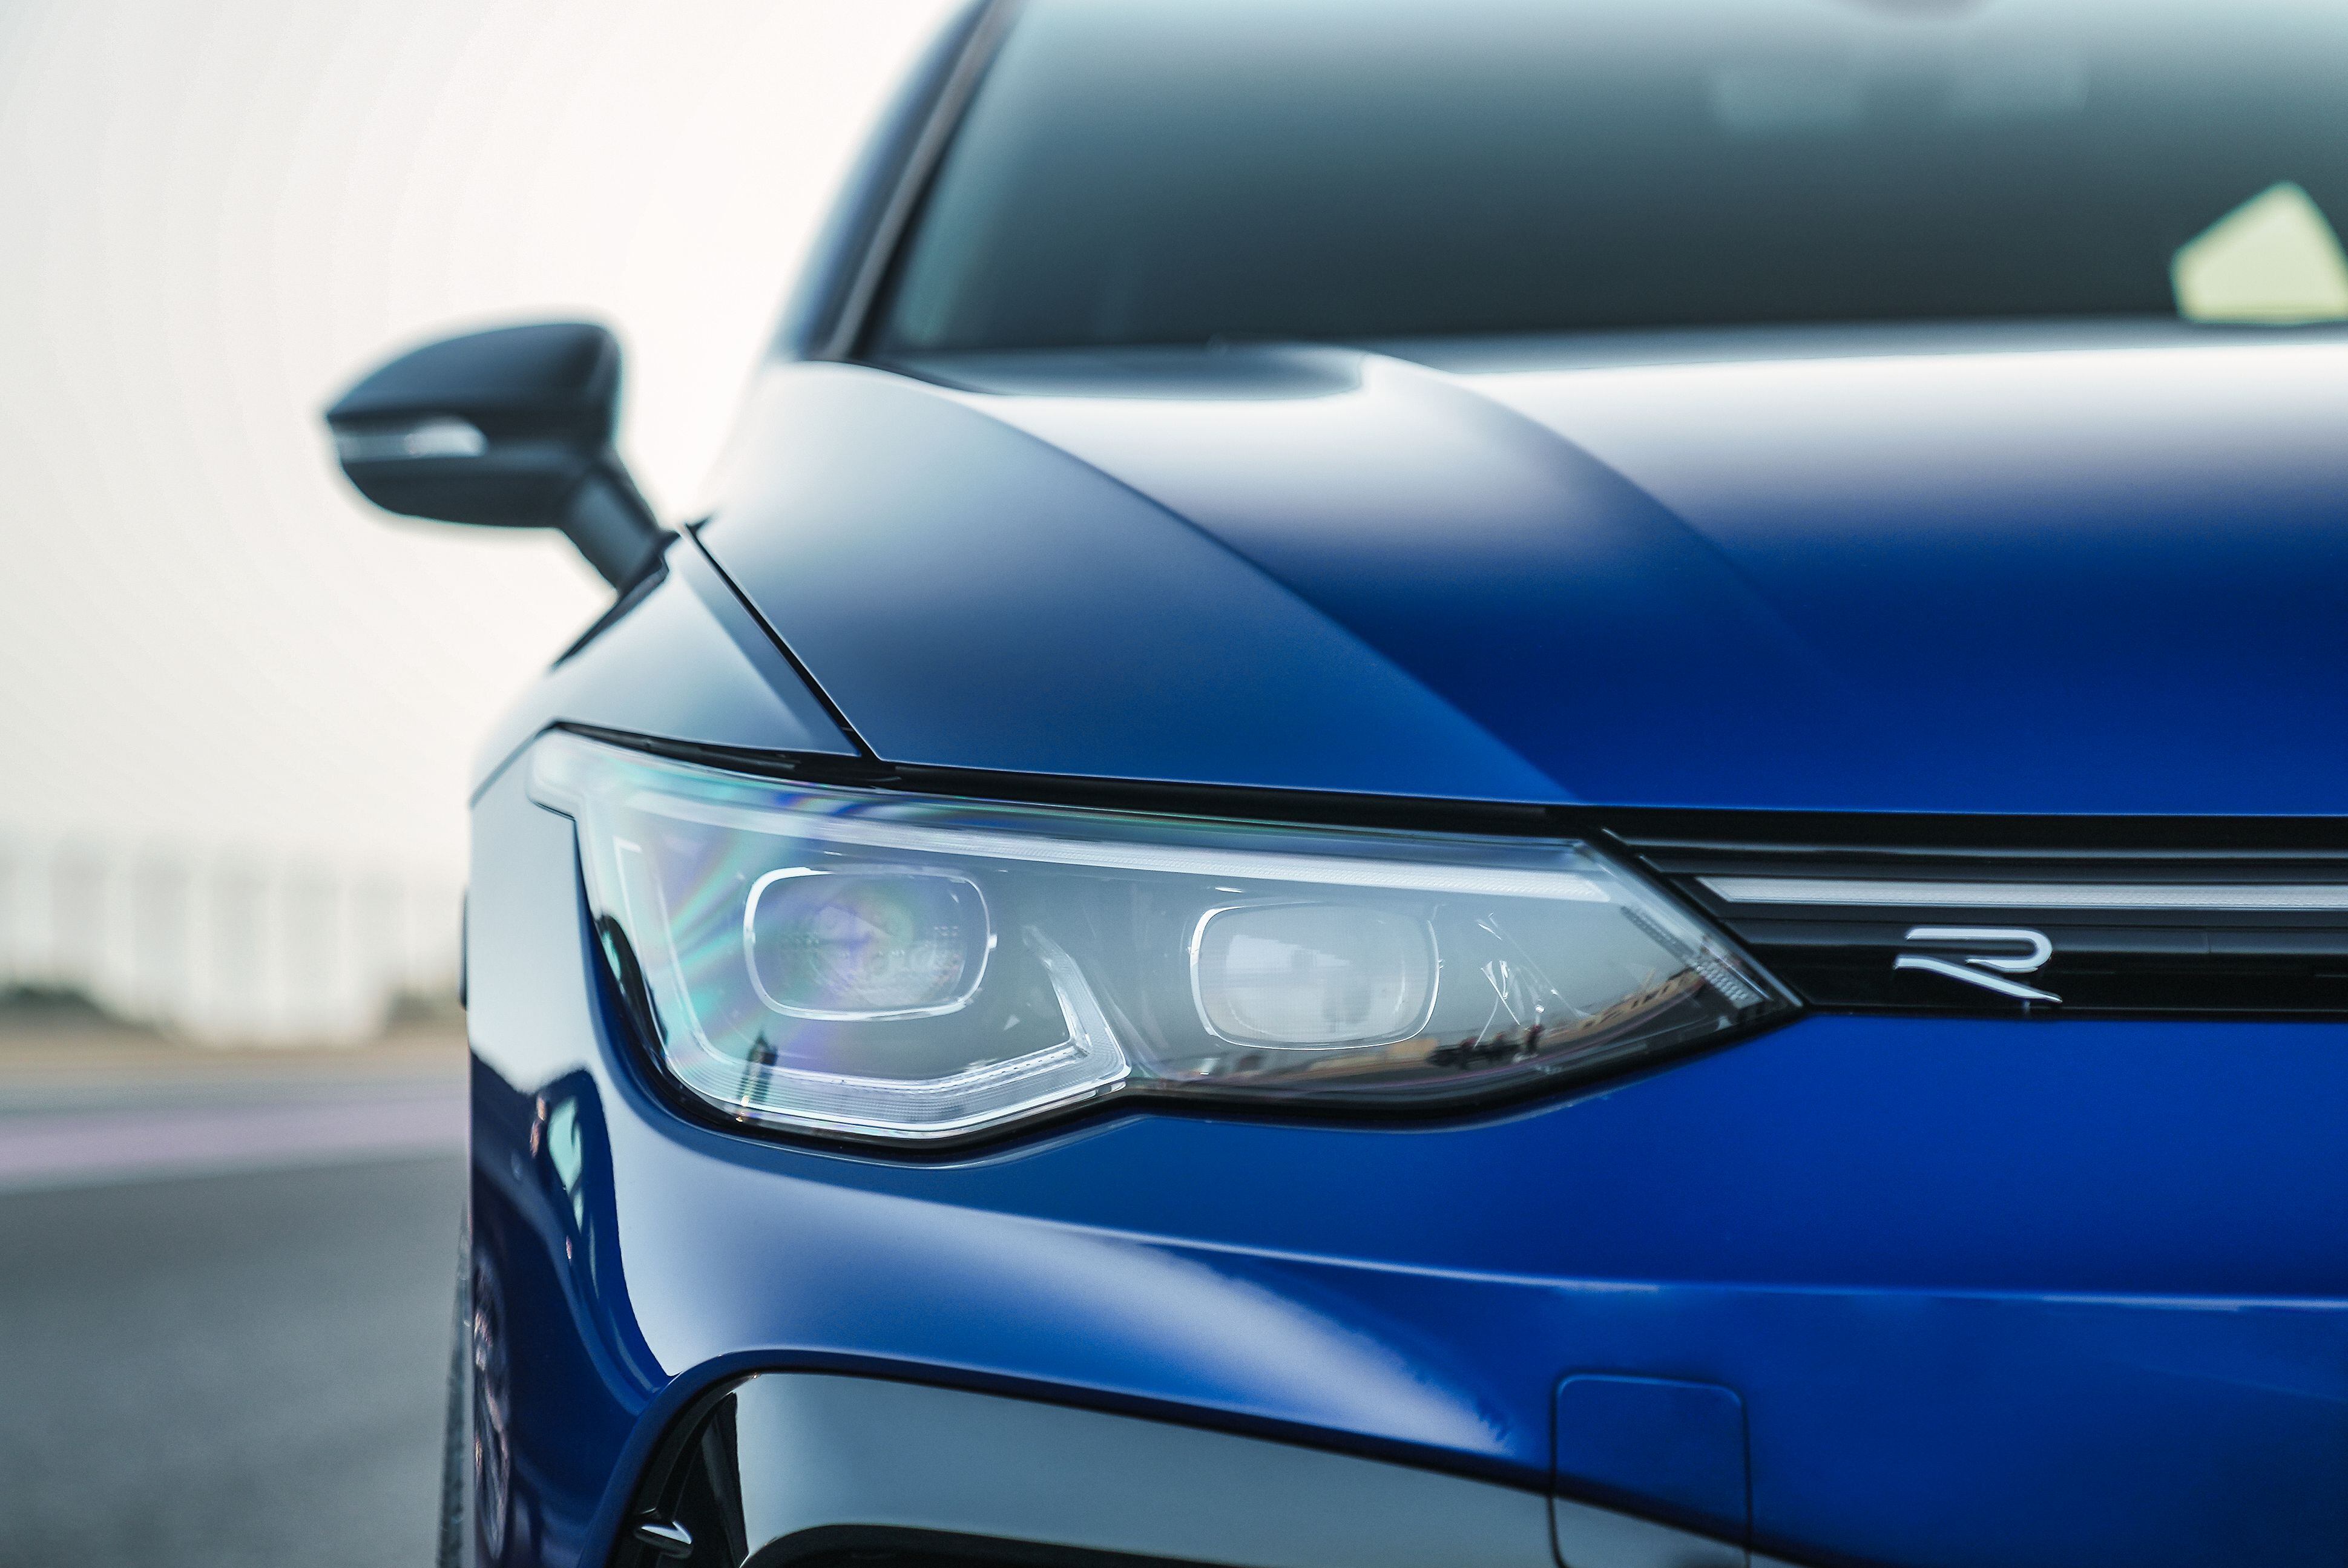 Volkswagen Golf R review: a stylish pocket rocket